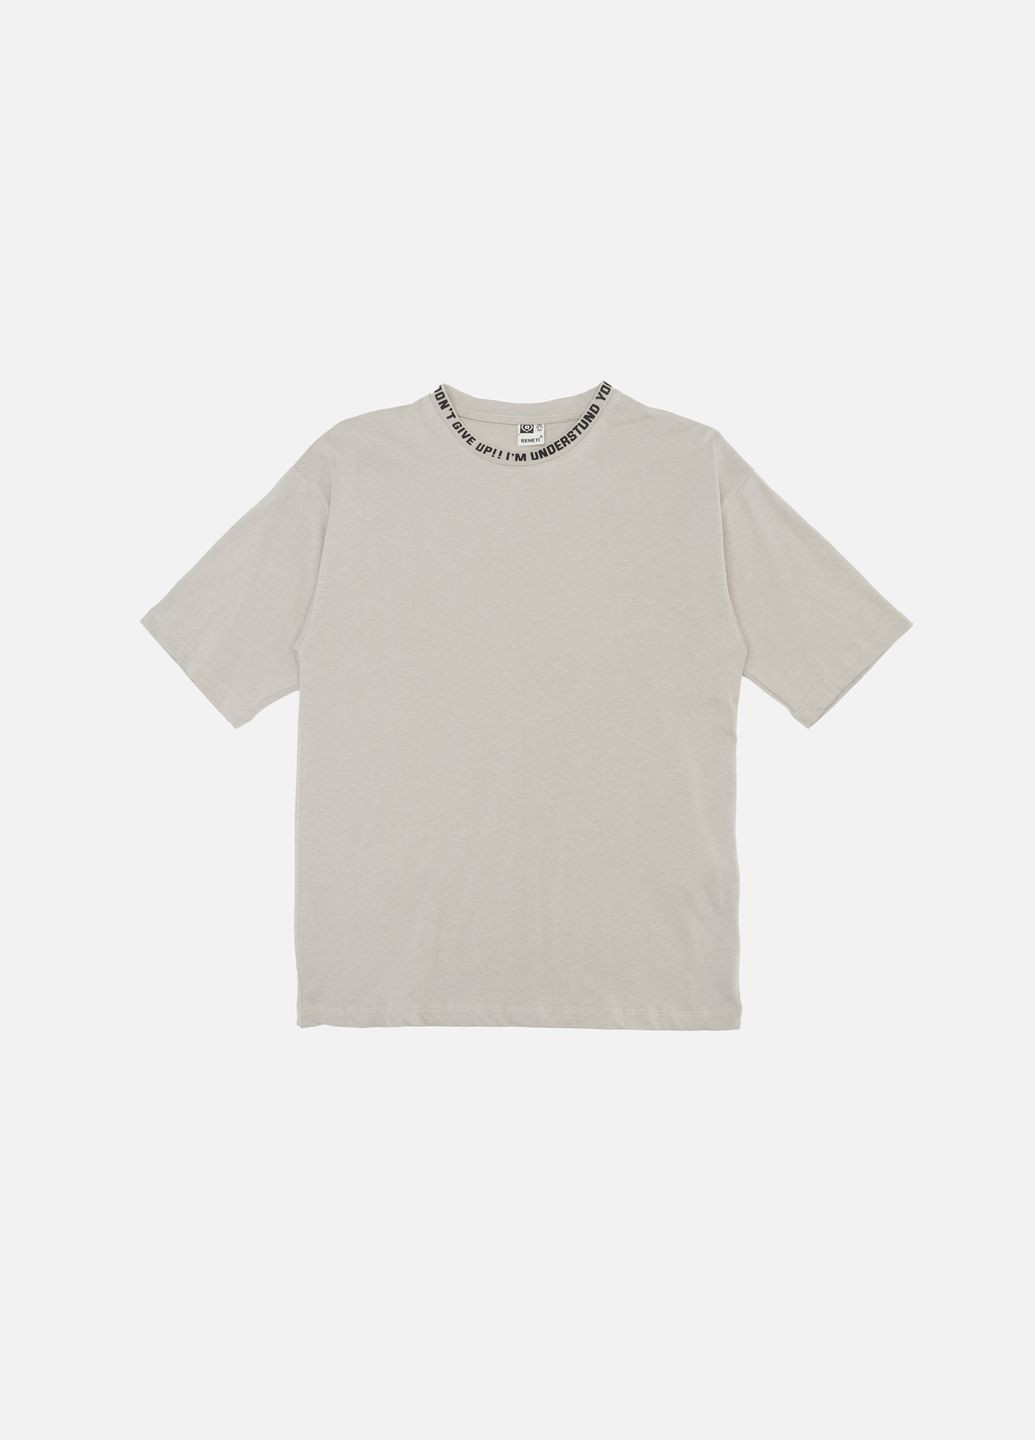 Серая летняя футболка с коротким рукавом для мальчика цвет серый цб-00242378 Beneti